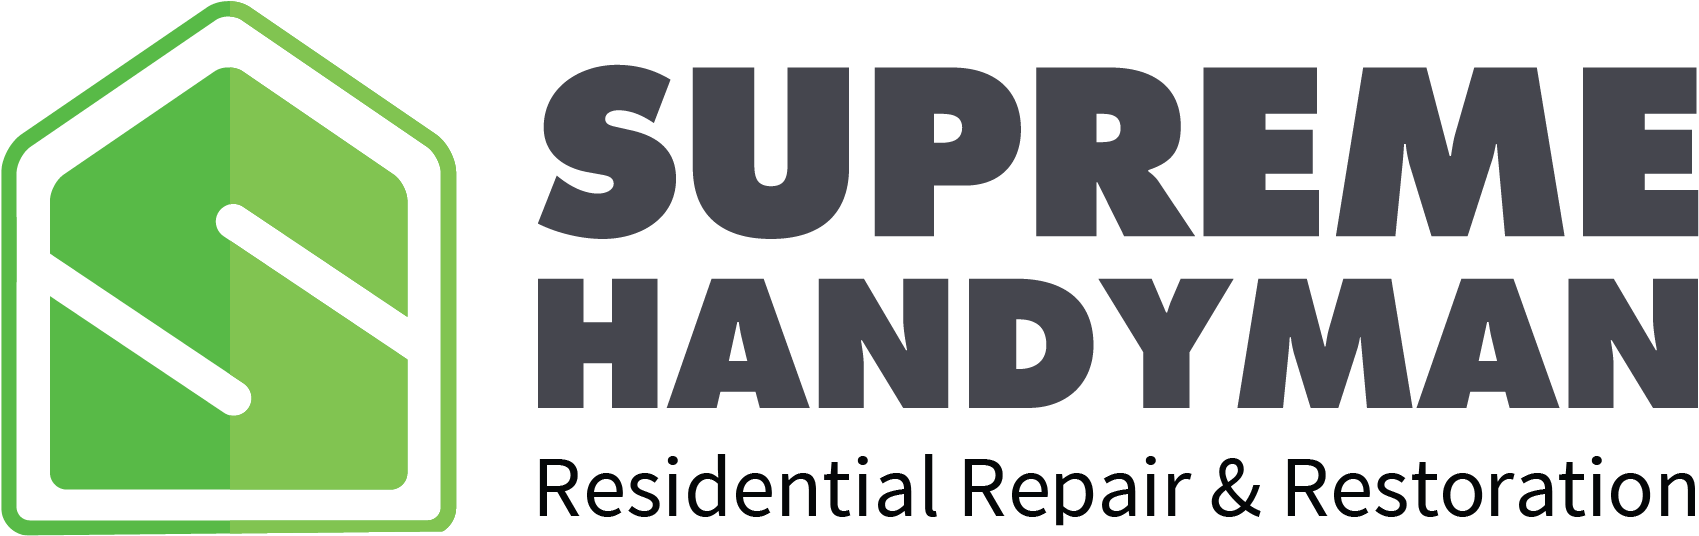 Supreme Handyman Business Type - Apple (2100x1500)